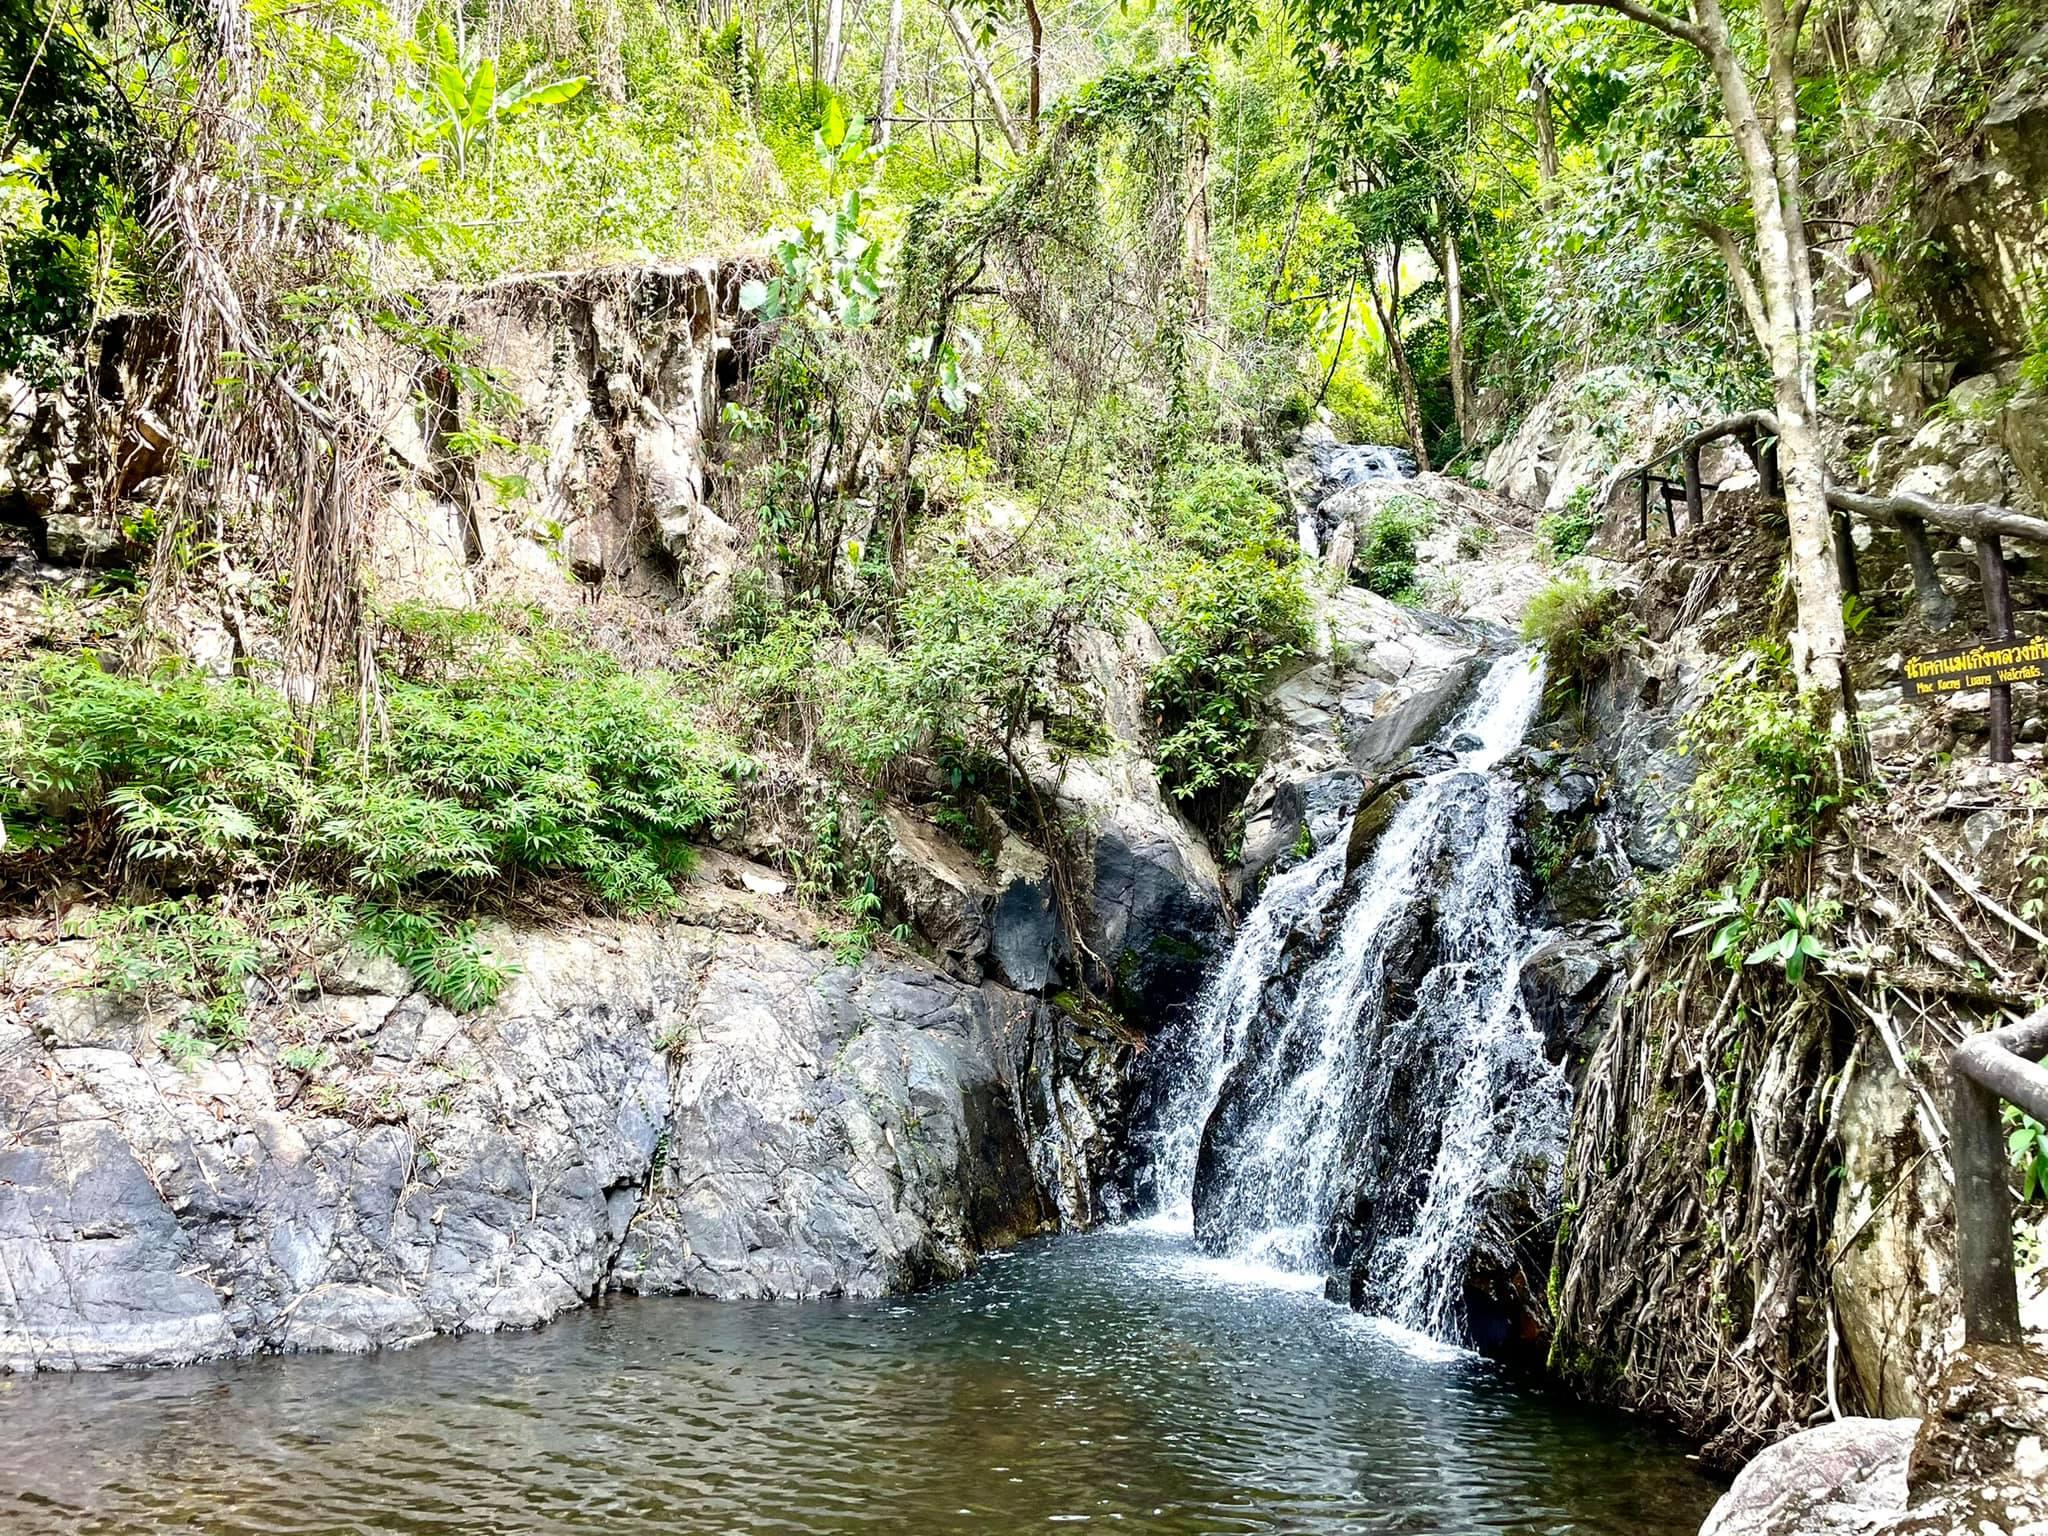 Mae Koeng Luang Waterfall